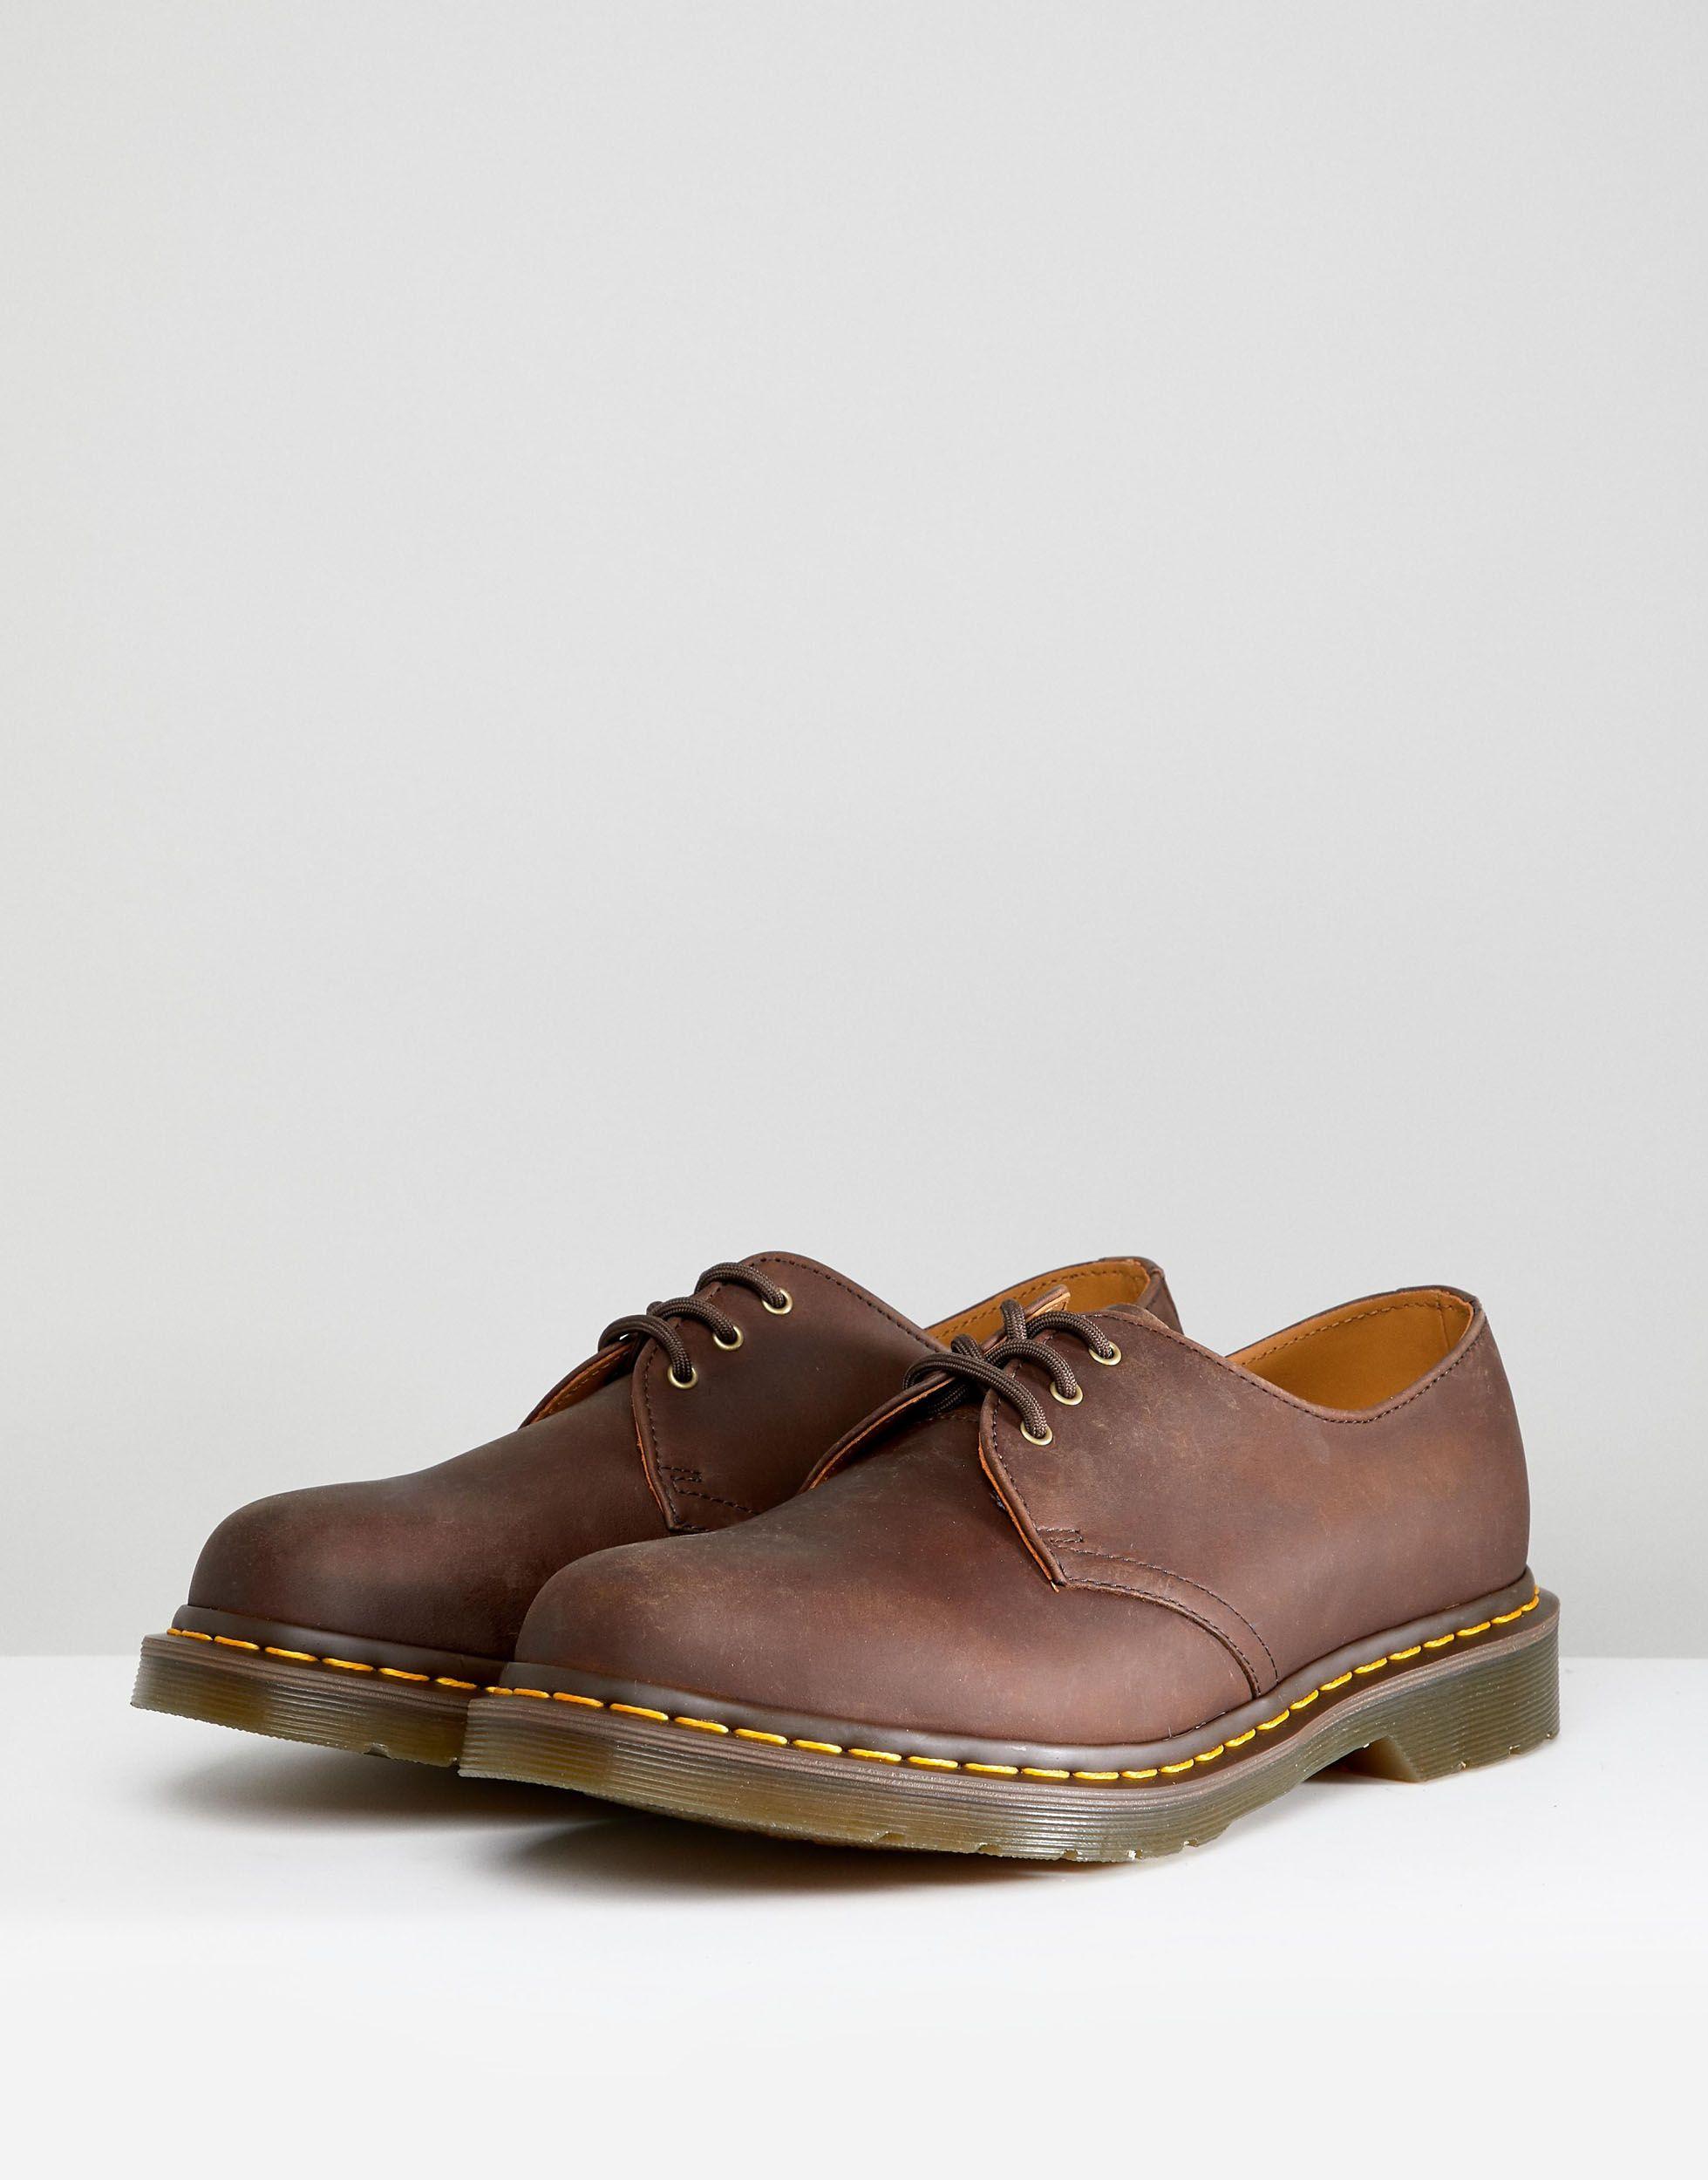 Dr. Martens Leather Dr. Martens 1461 3-eye Shoe in Brown for Men - Save 14%  | Lyst